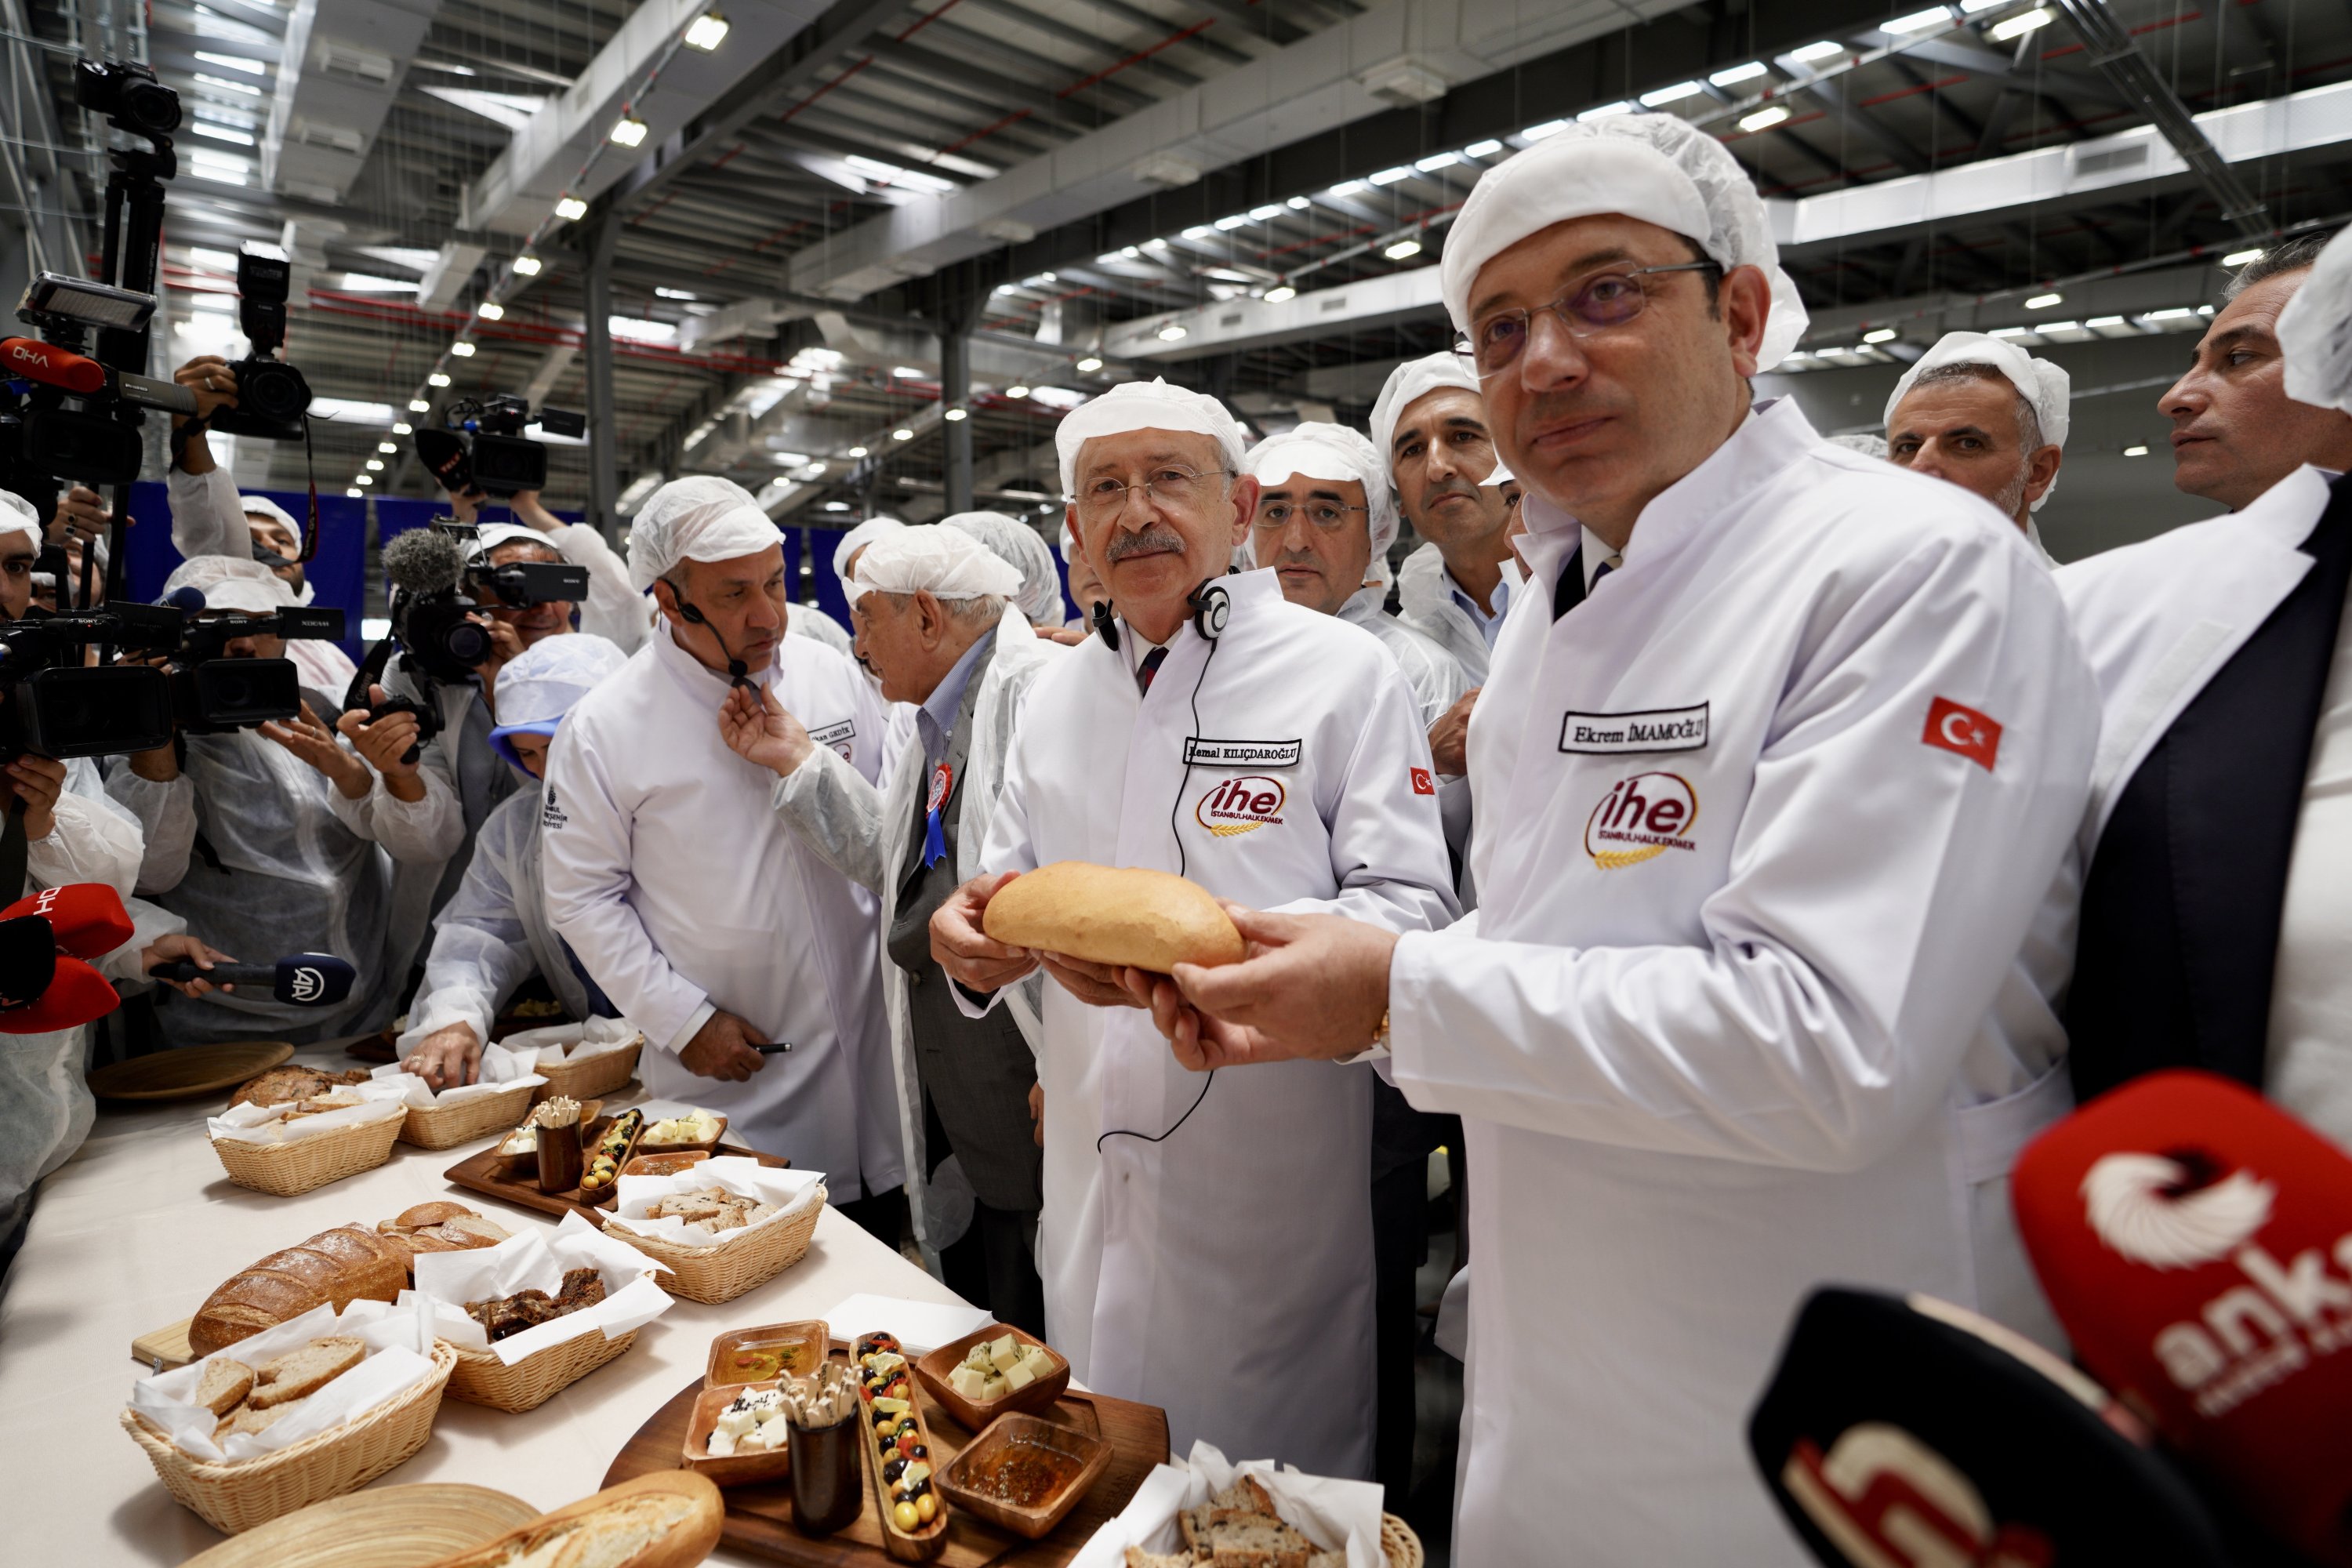 Istanbul Mayor Ekrem Imamoğlu (R) and CHP Chair Kemal Kılıçdaroğlu (2nd R) attend the opening ceremony for the now unused bread factory, Istanbul, Türkiye, July 23, 2022. (Photo by Barış Savaş)